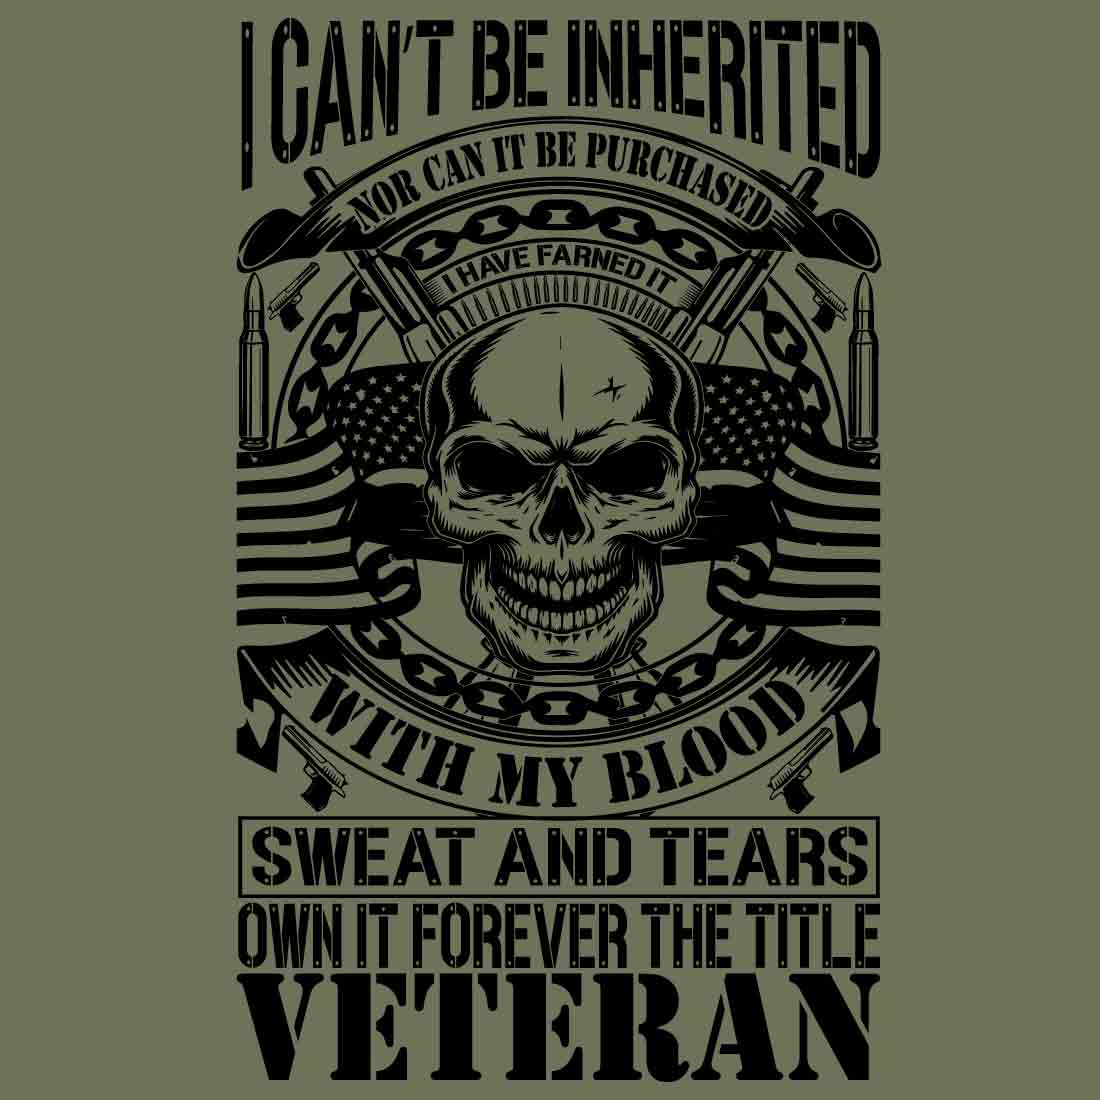 Motivational Veteran T-Shirt Design'' cover image.